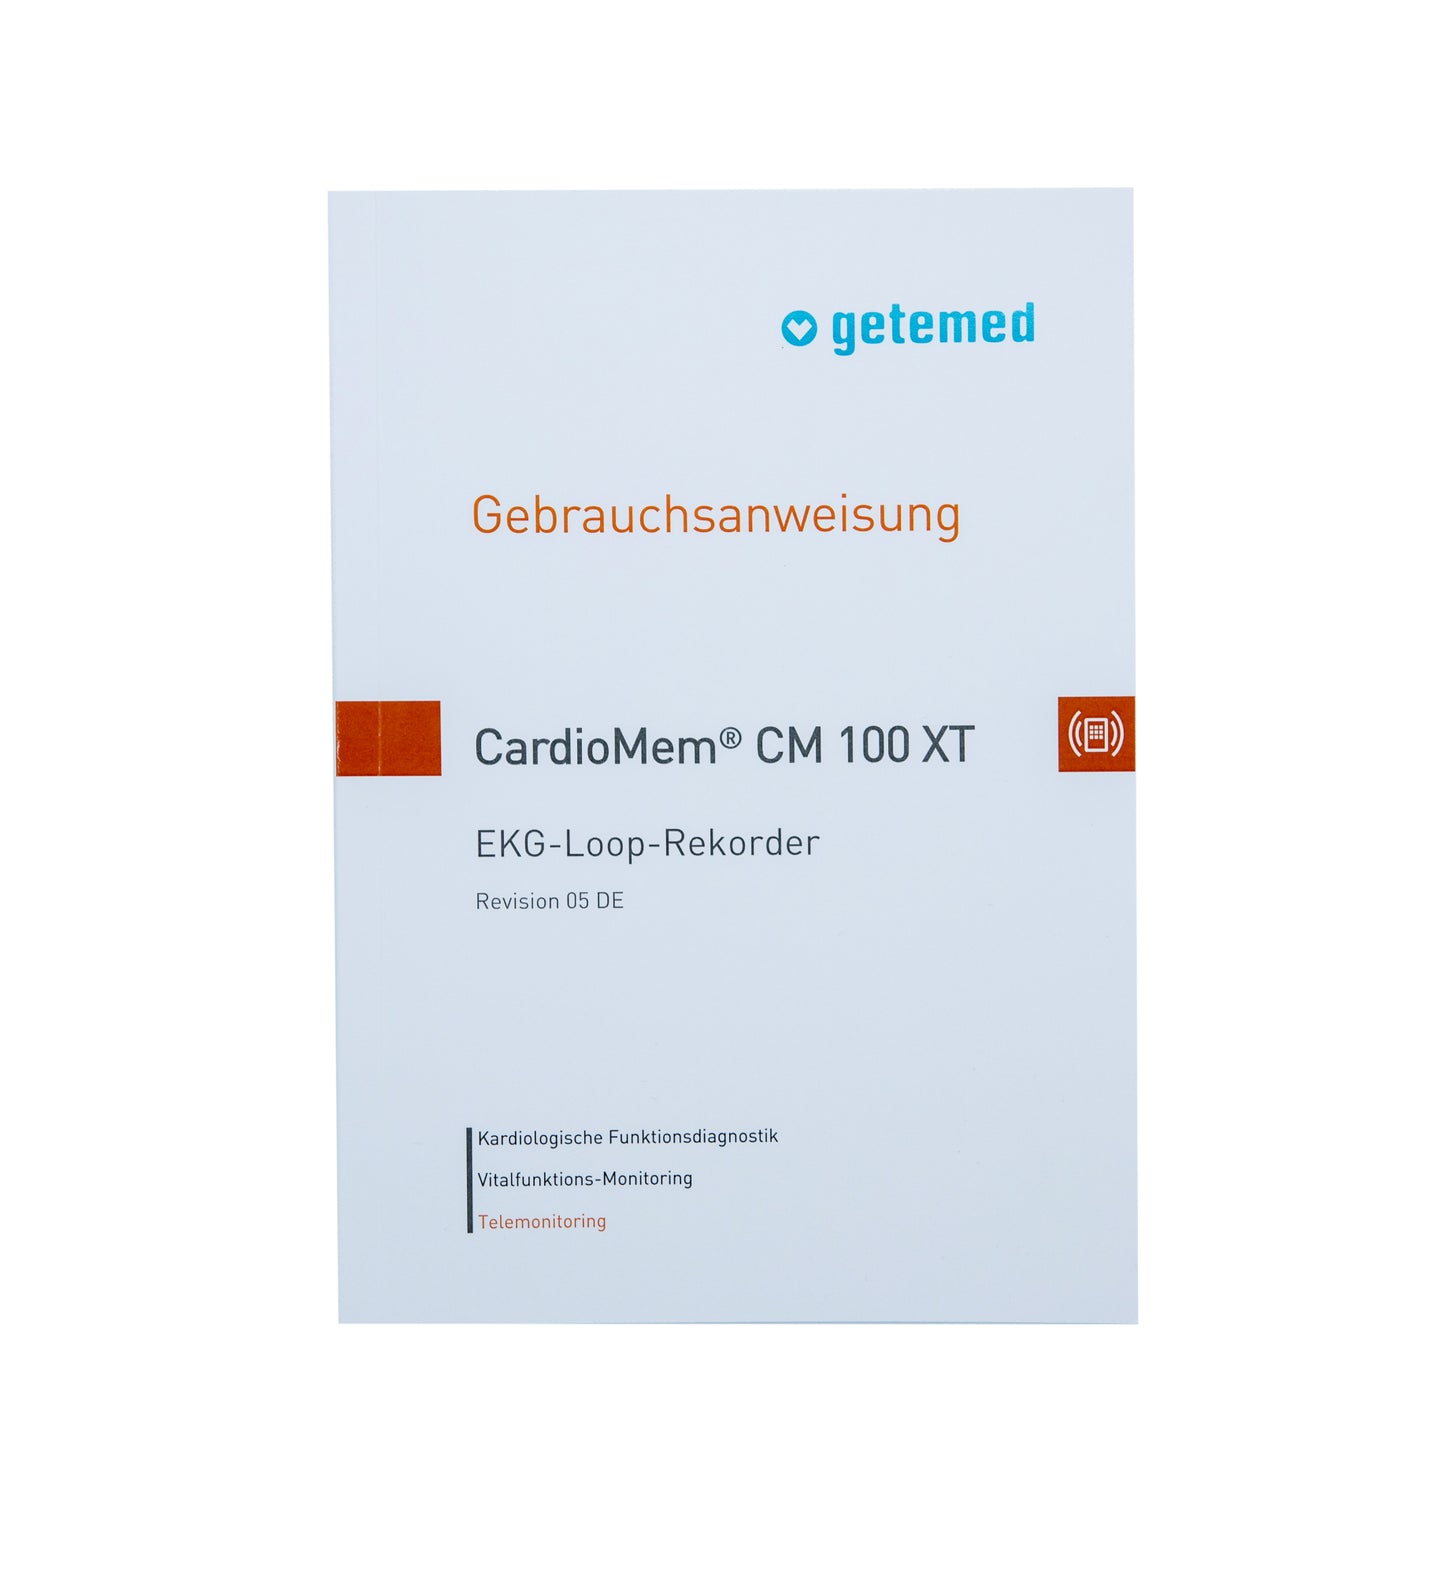 Gebrauchsanweisung DE für CardioMem® CM 100 XT